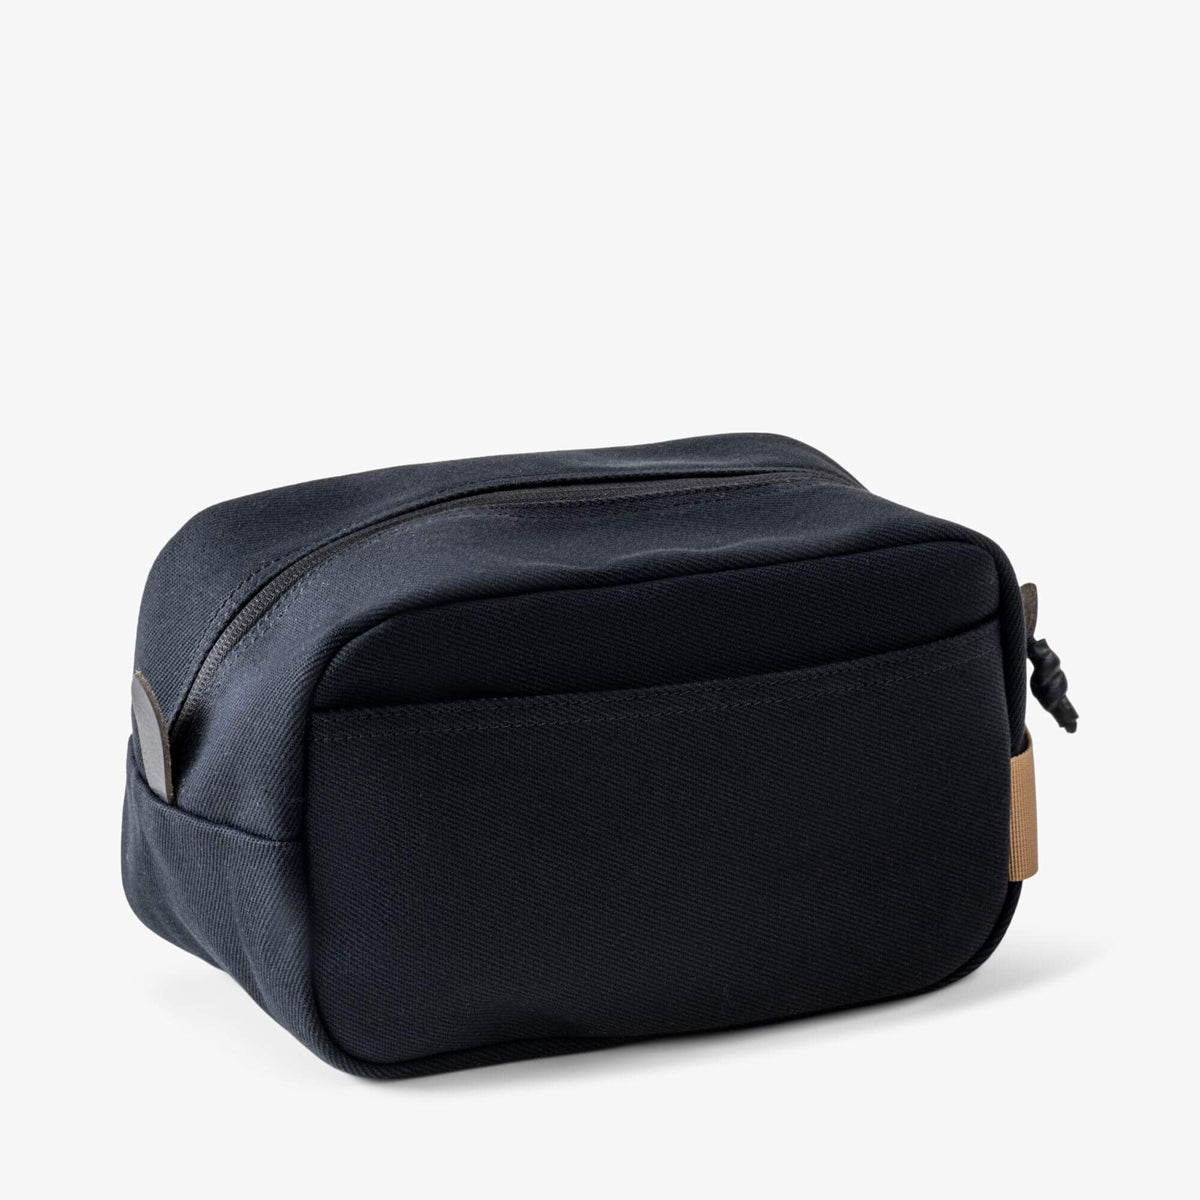 Langly : Weekender Kit Bag : Black